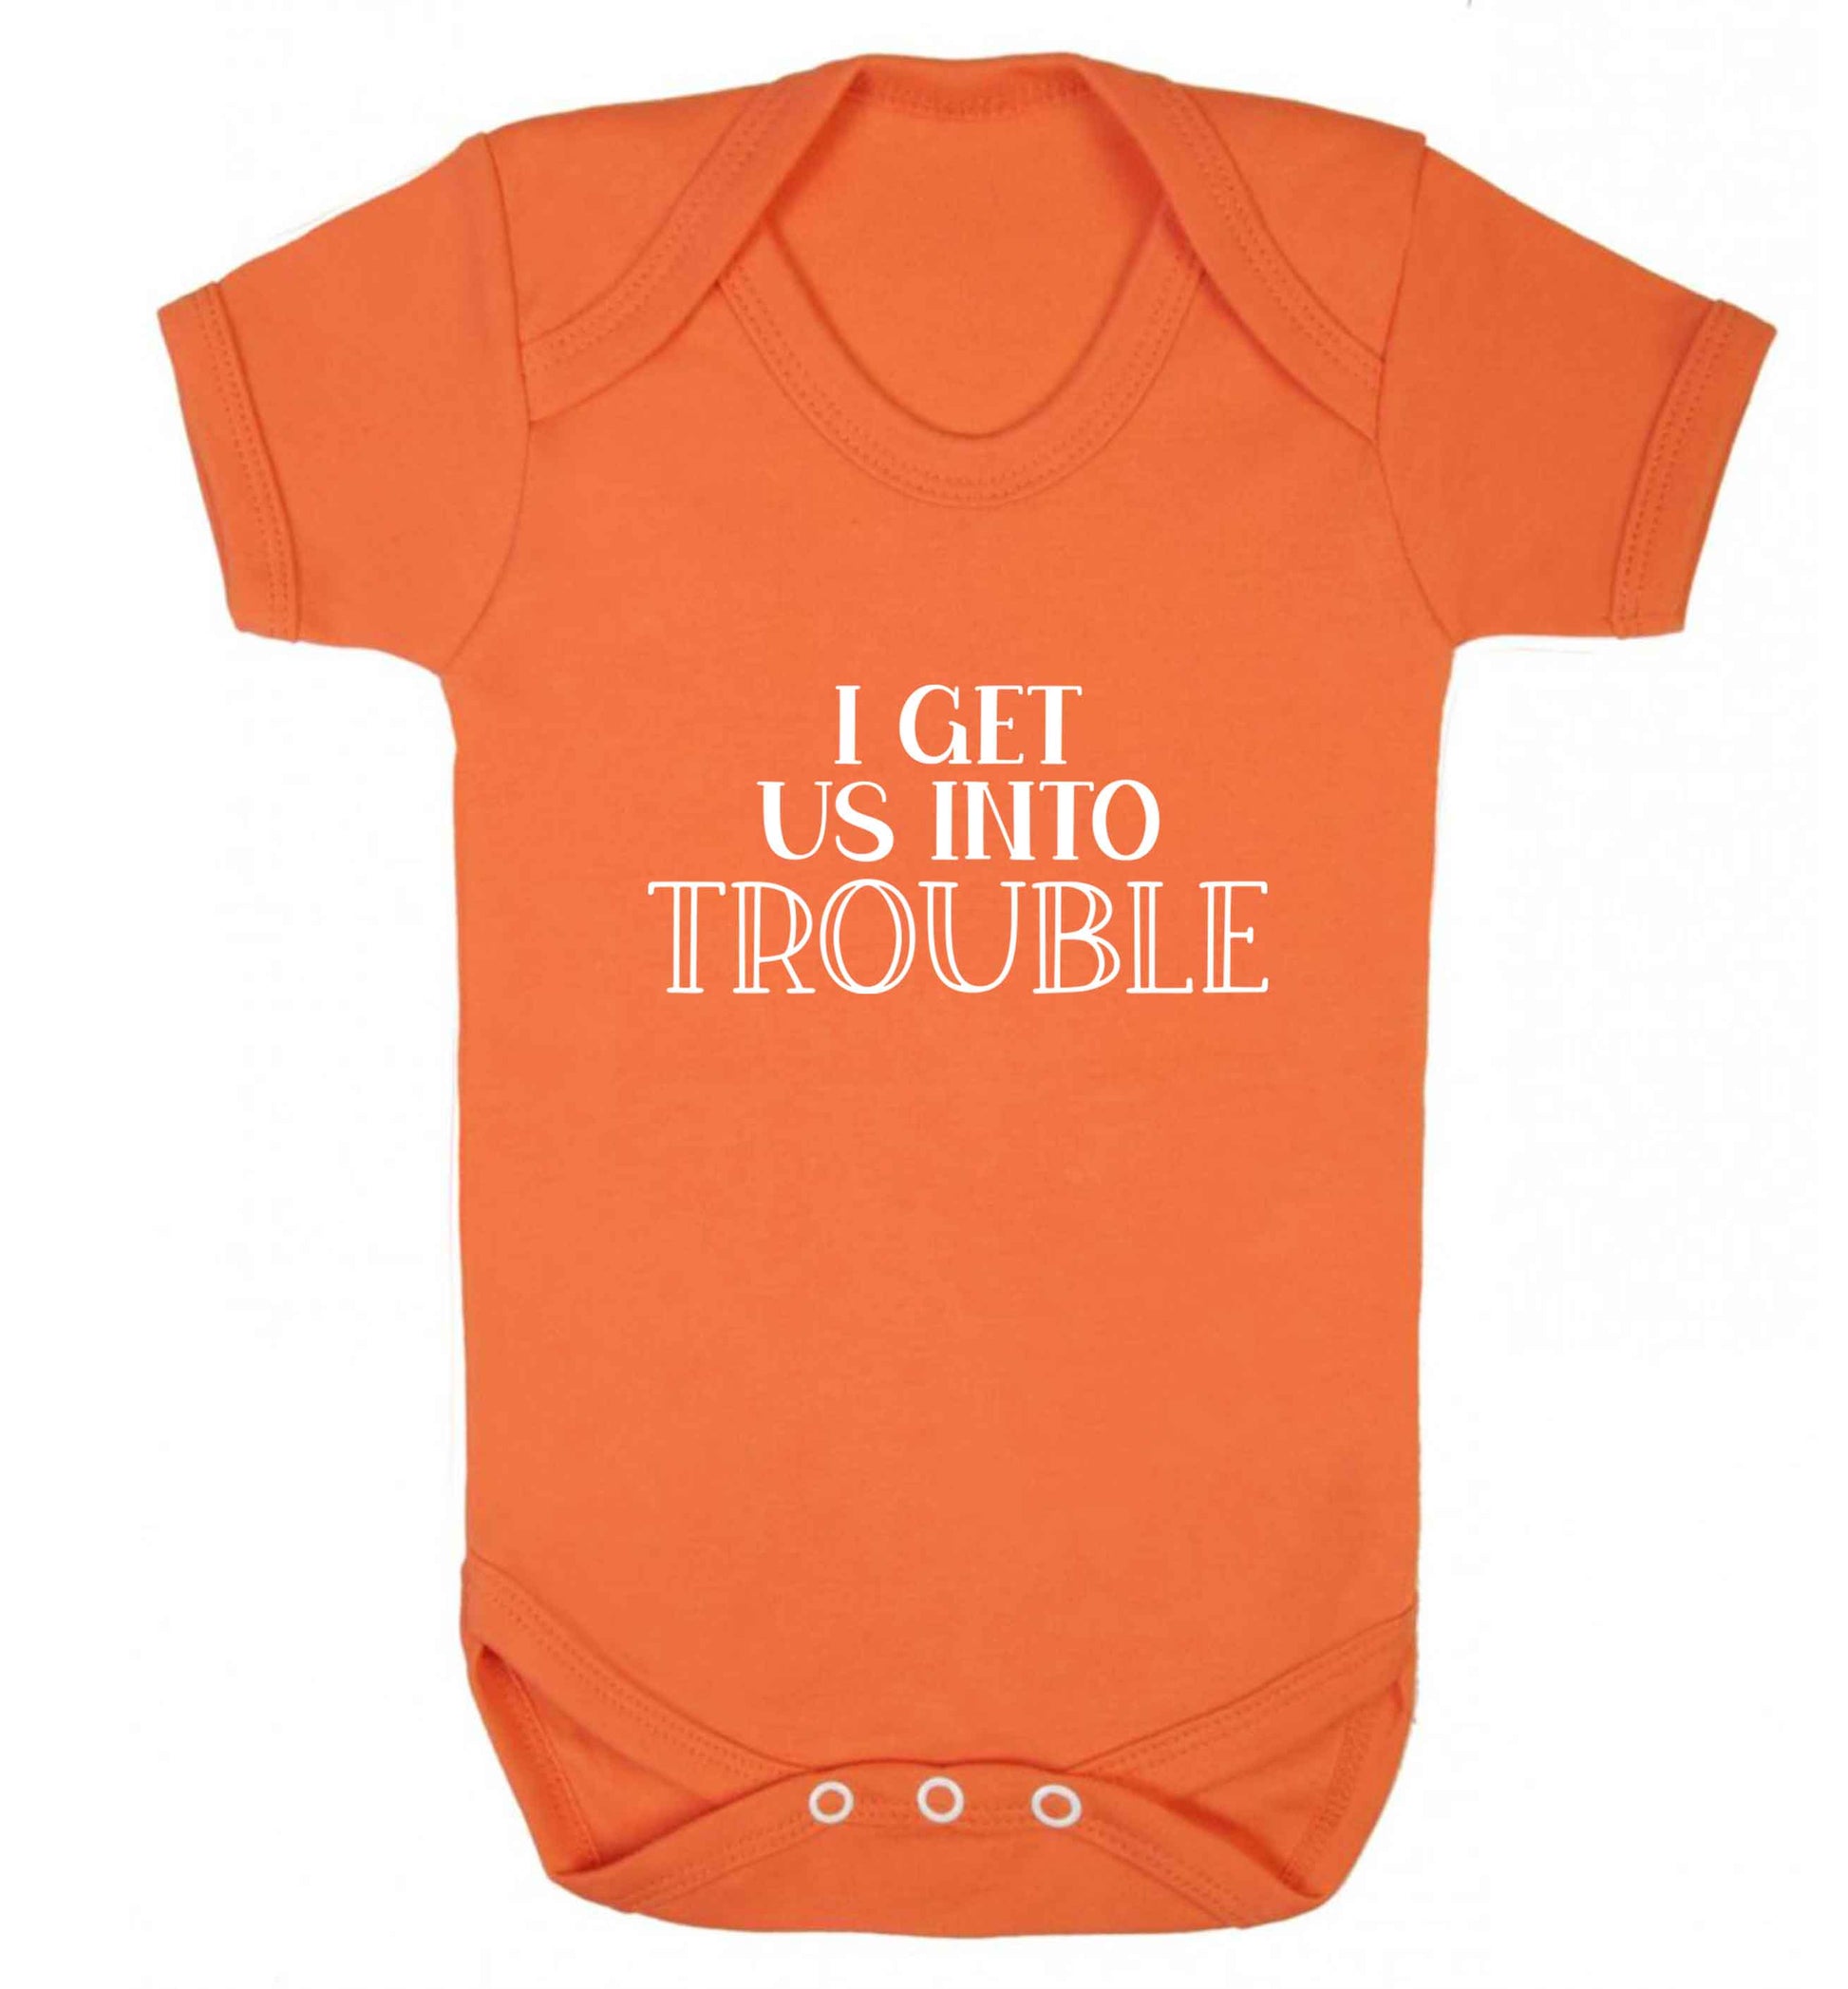 I get us into trouble baby vest orange 18-24 months